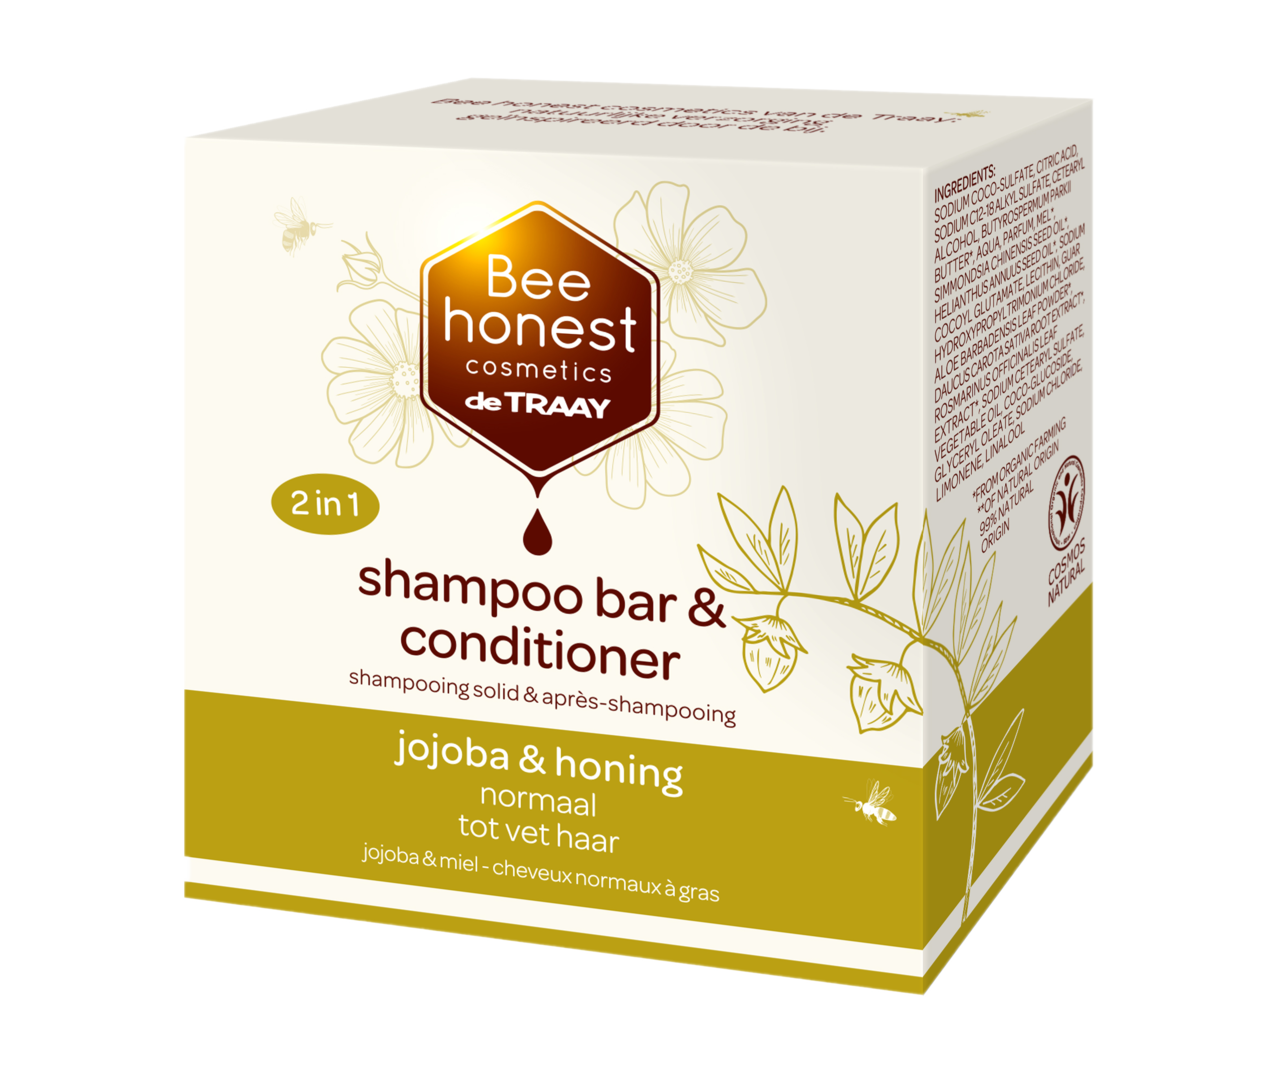 Shampoobar & Conditioner jojoba & honing - Bee Honest